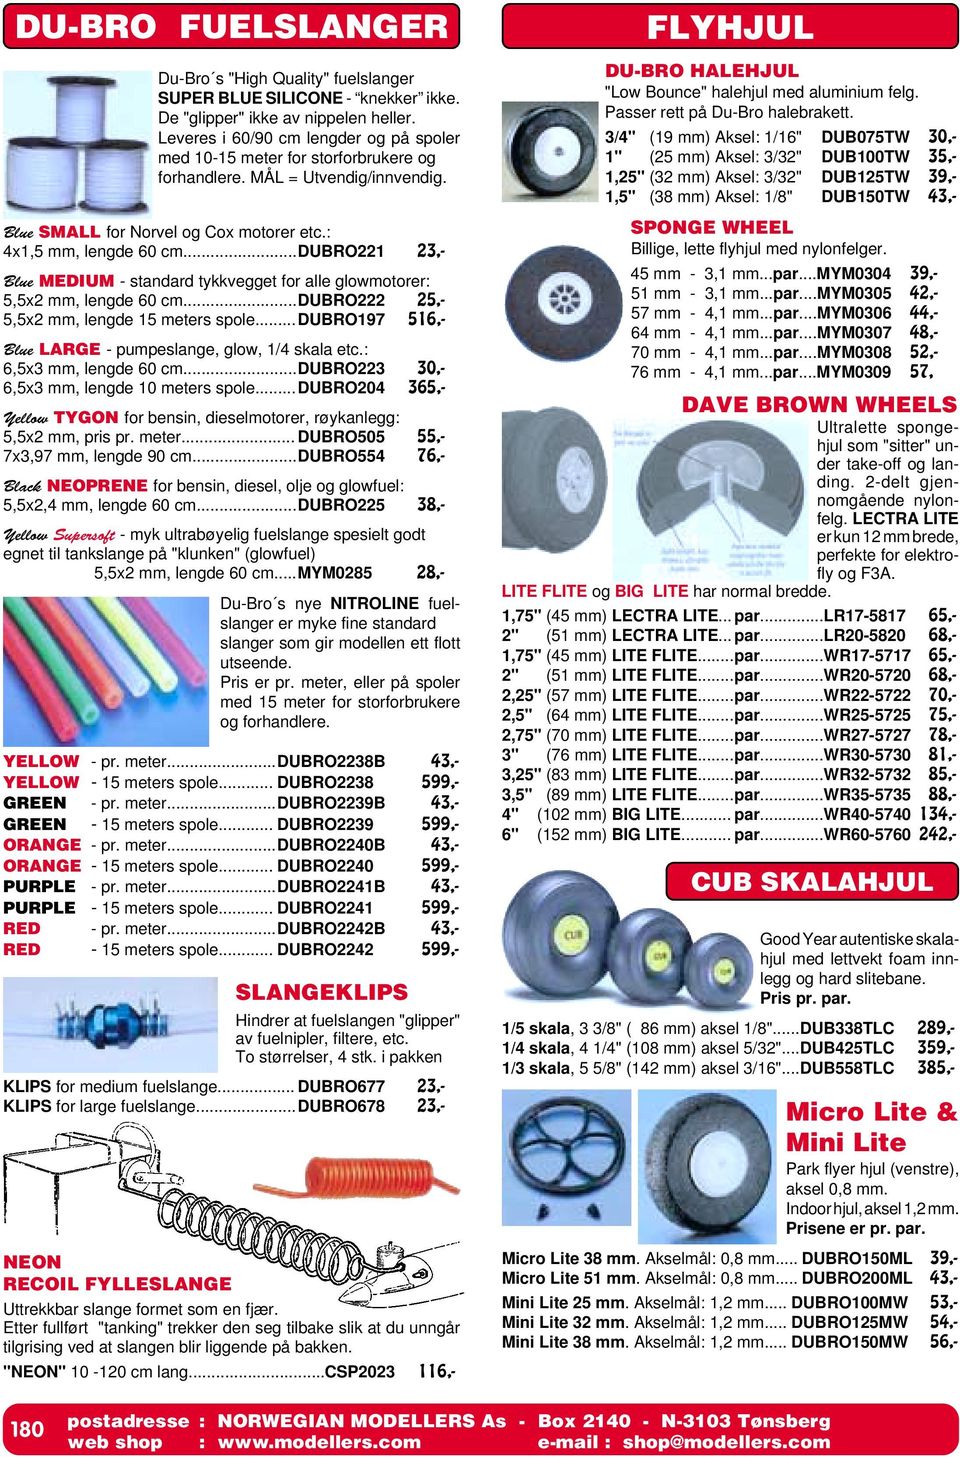 ..dubro221 23,- Blue MEDIUM - standard tykkvegget for alle glowmotorer: 5,5x2 mm, lengde 60 cm...dubro222 25,- 5,5x2 mm, lengde 15 meters spole.